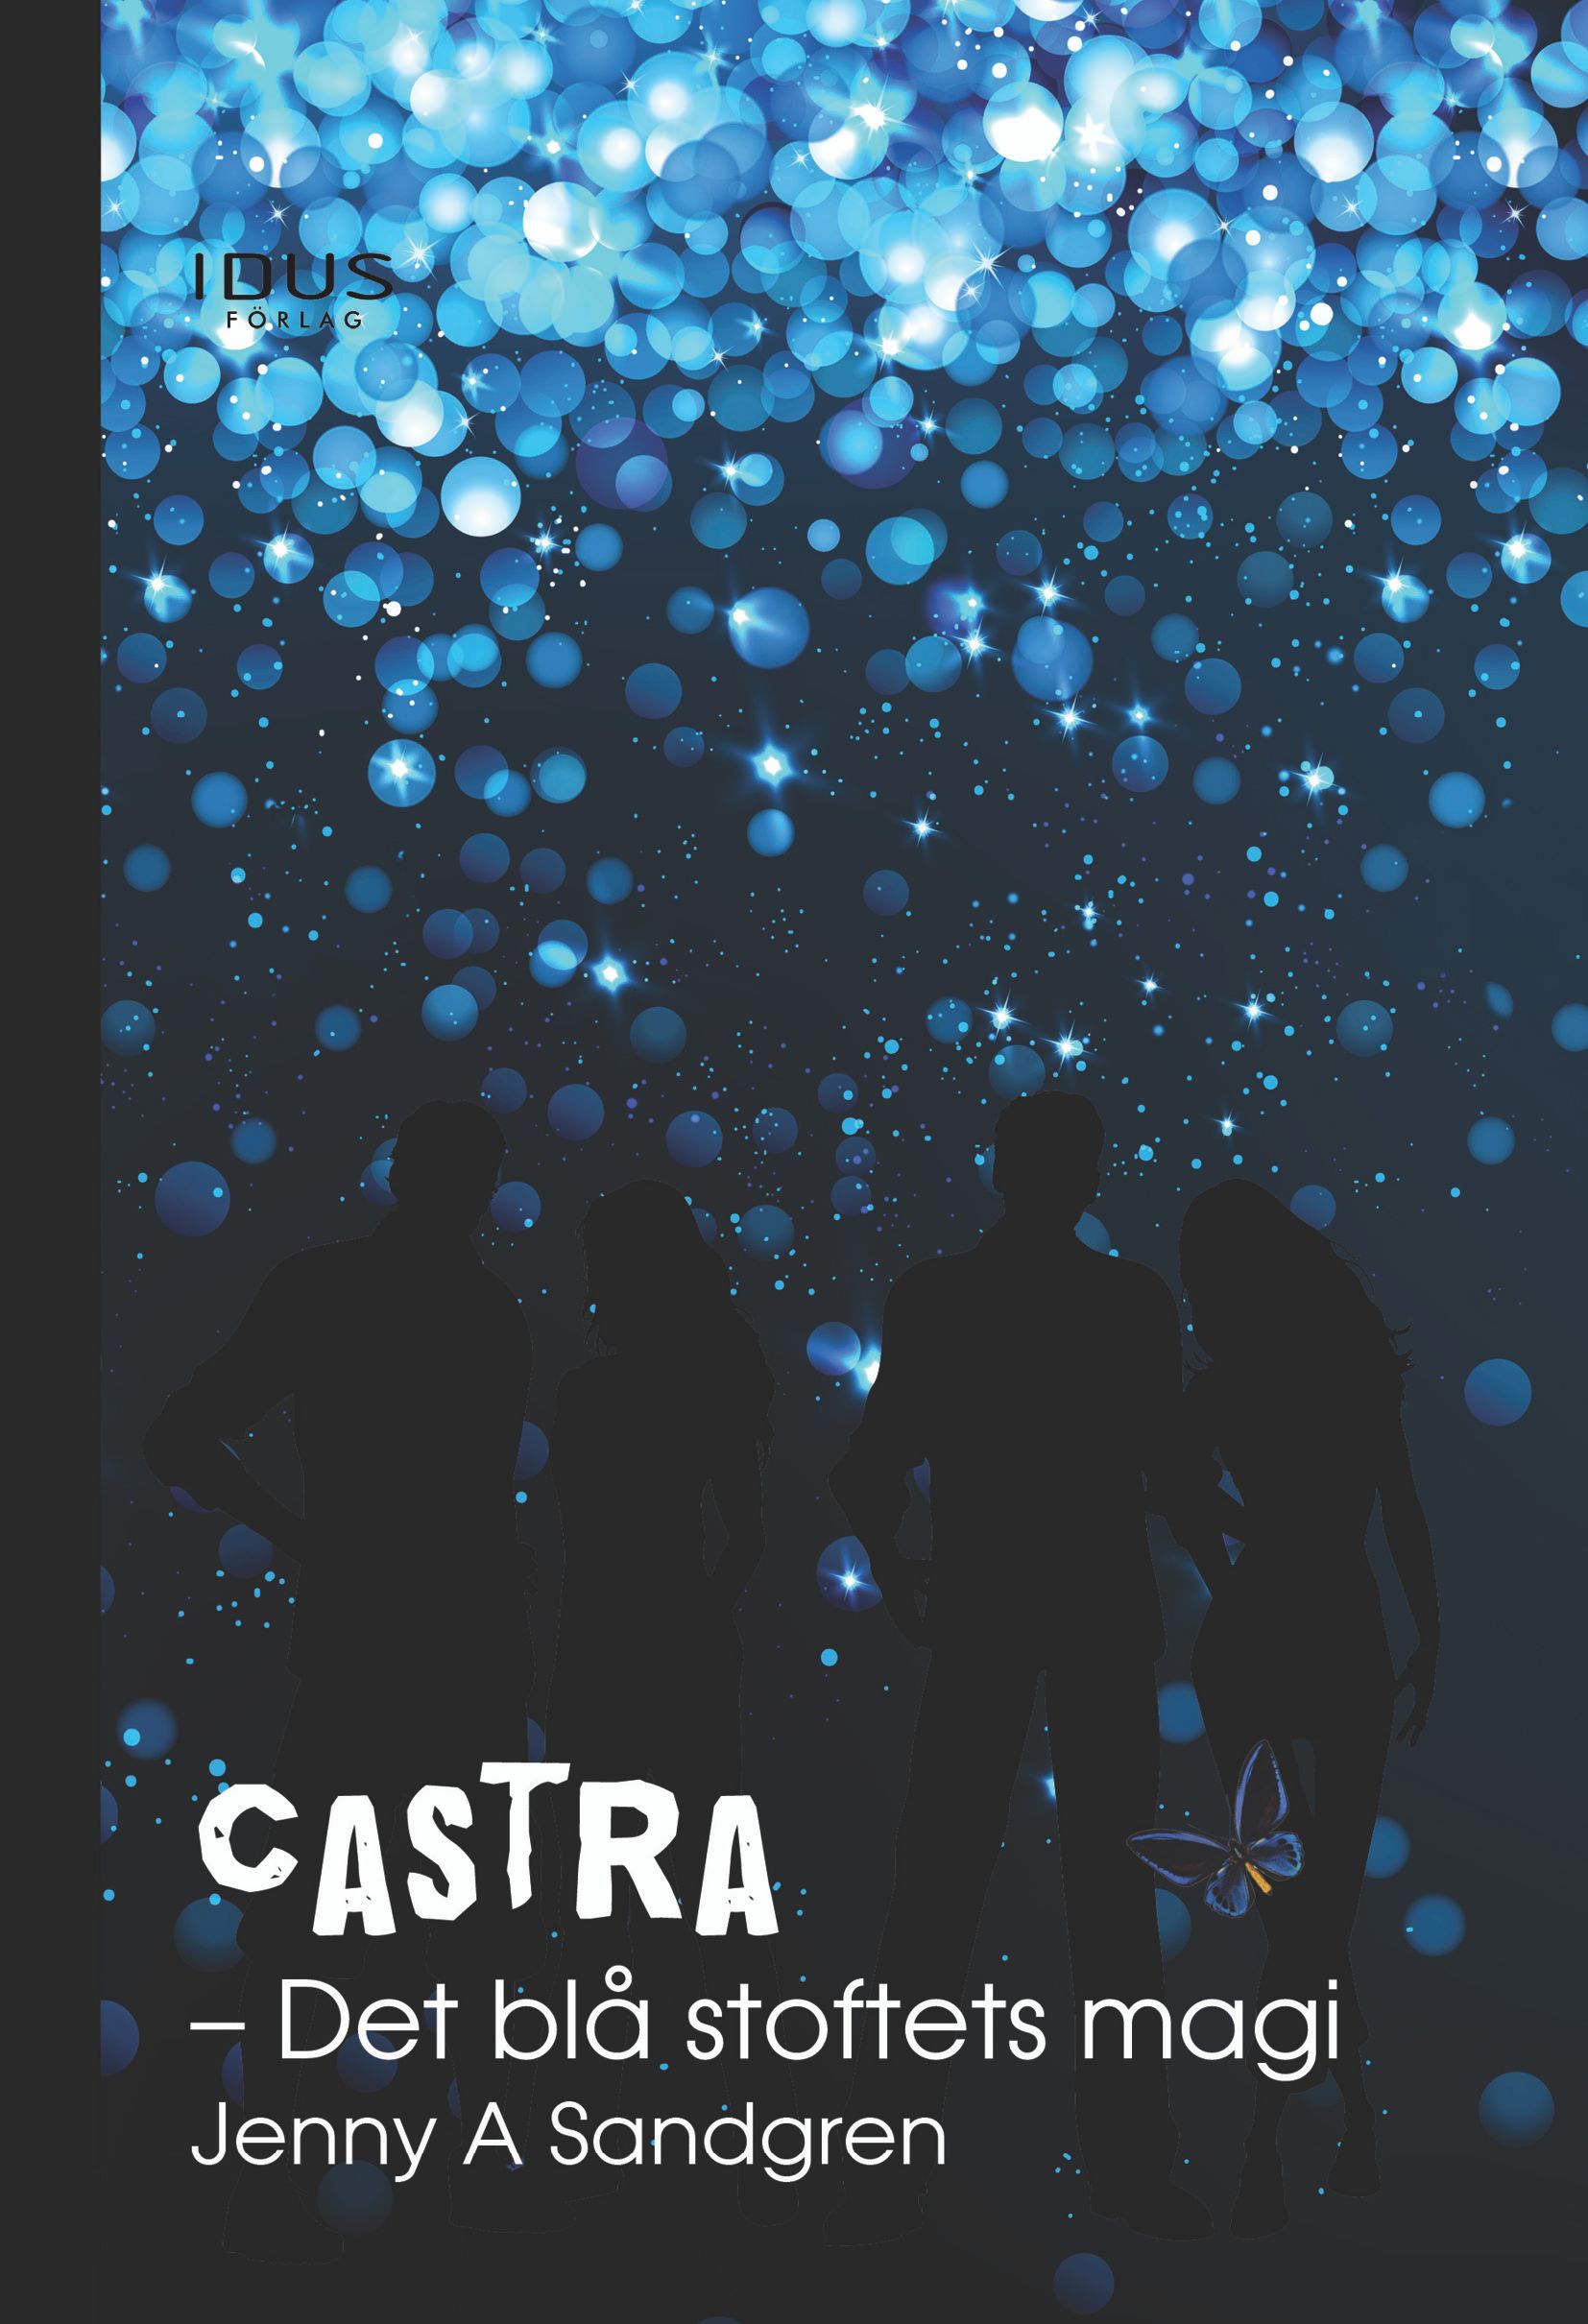 Castra. Det blå stoftets magi, eBook by Jenny A Sandgren